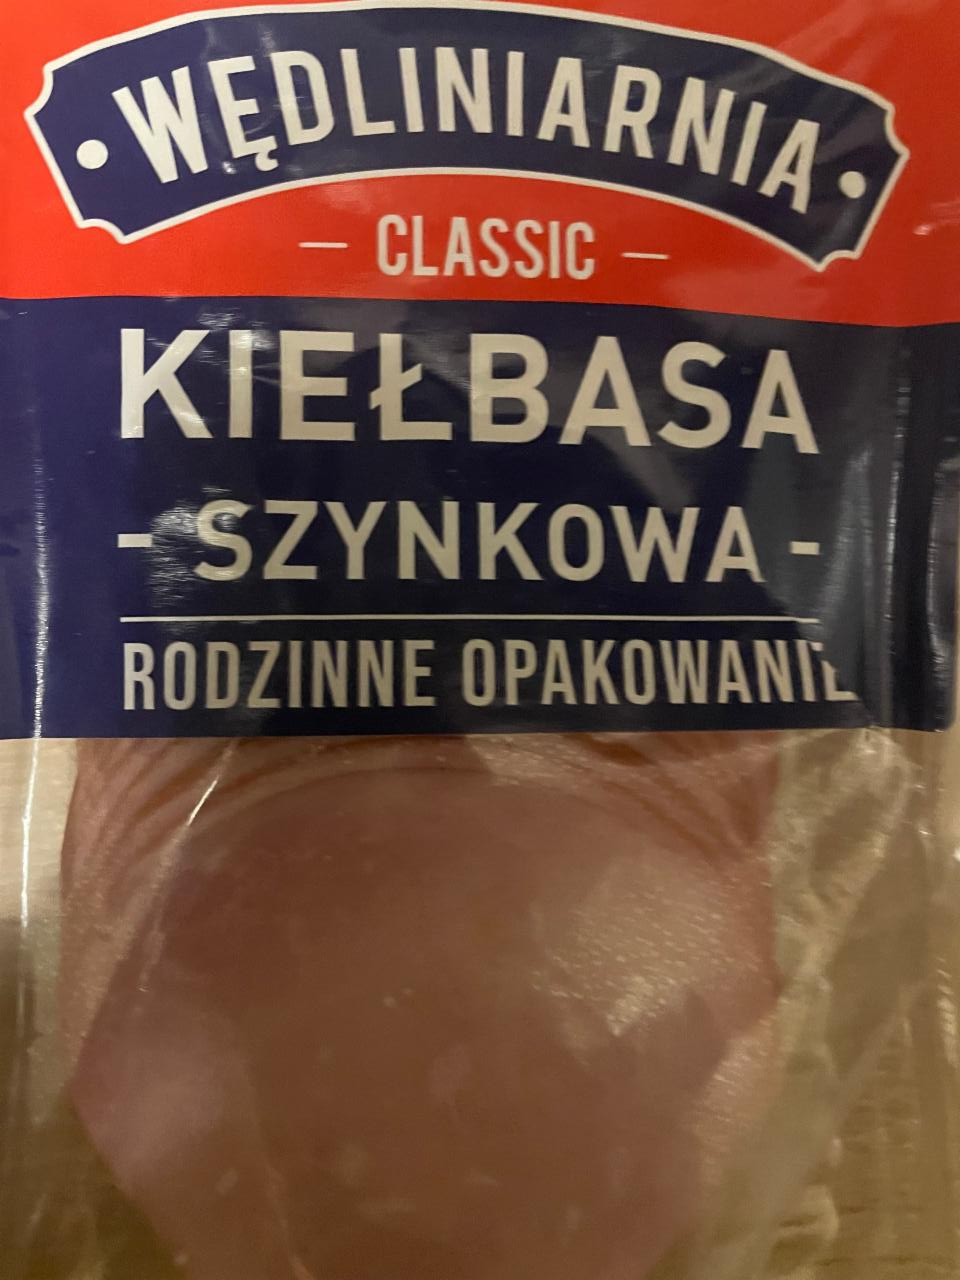 Фото - Ветчинная колбаса ломтики Kiełbasa szynkowa Wędliniarnia